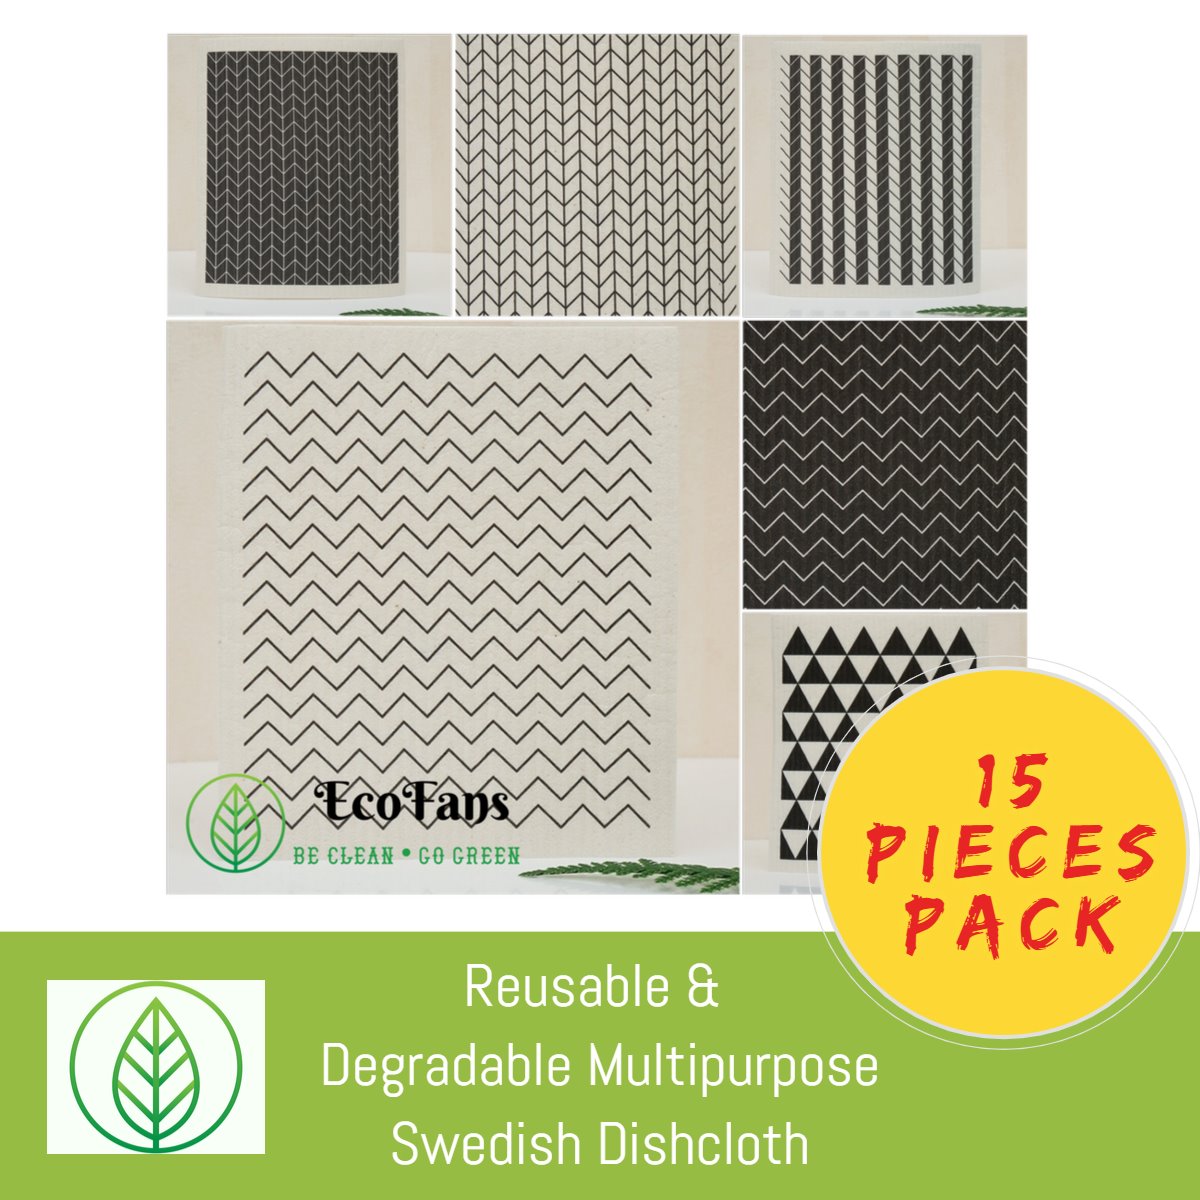 KT051-X-15-Reusable & Degradable Multipurpose Swedish Dishcloth-Cloth-ecofans-15-Tiles-